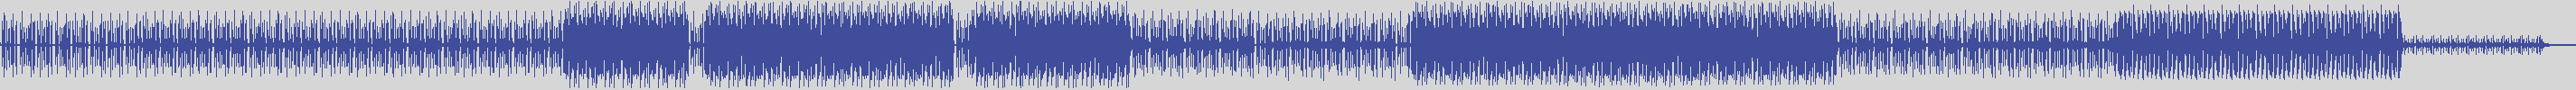 nf_boyz_records [NFY015] London Long - Tendence [Tribal Mix] audio wave form